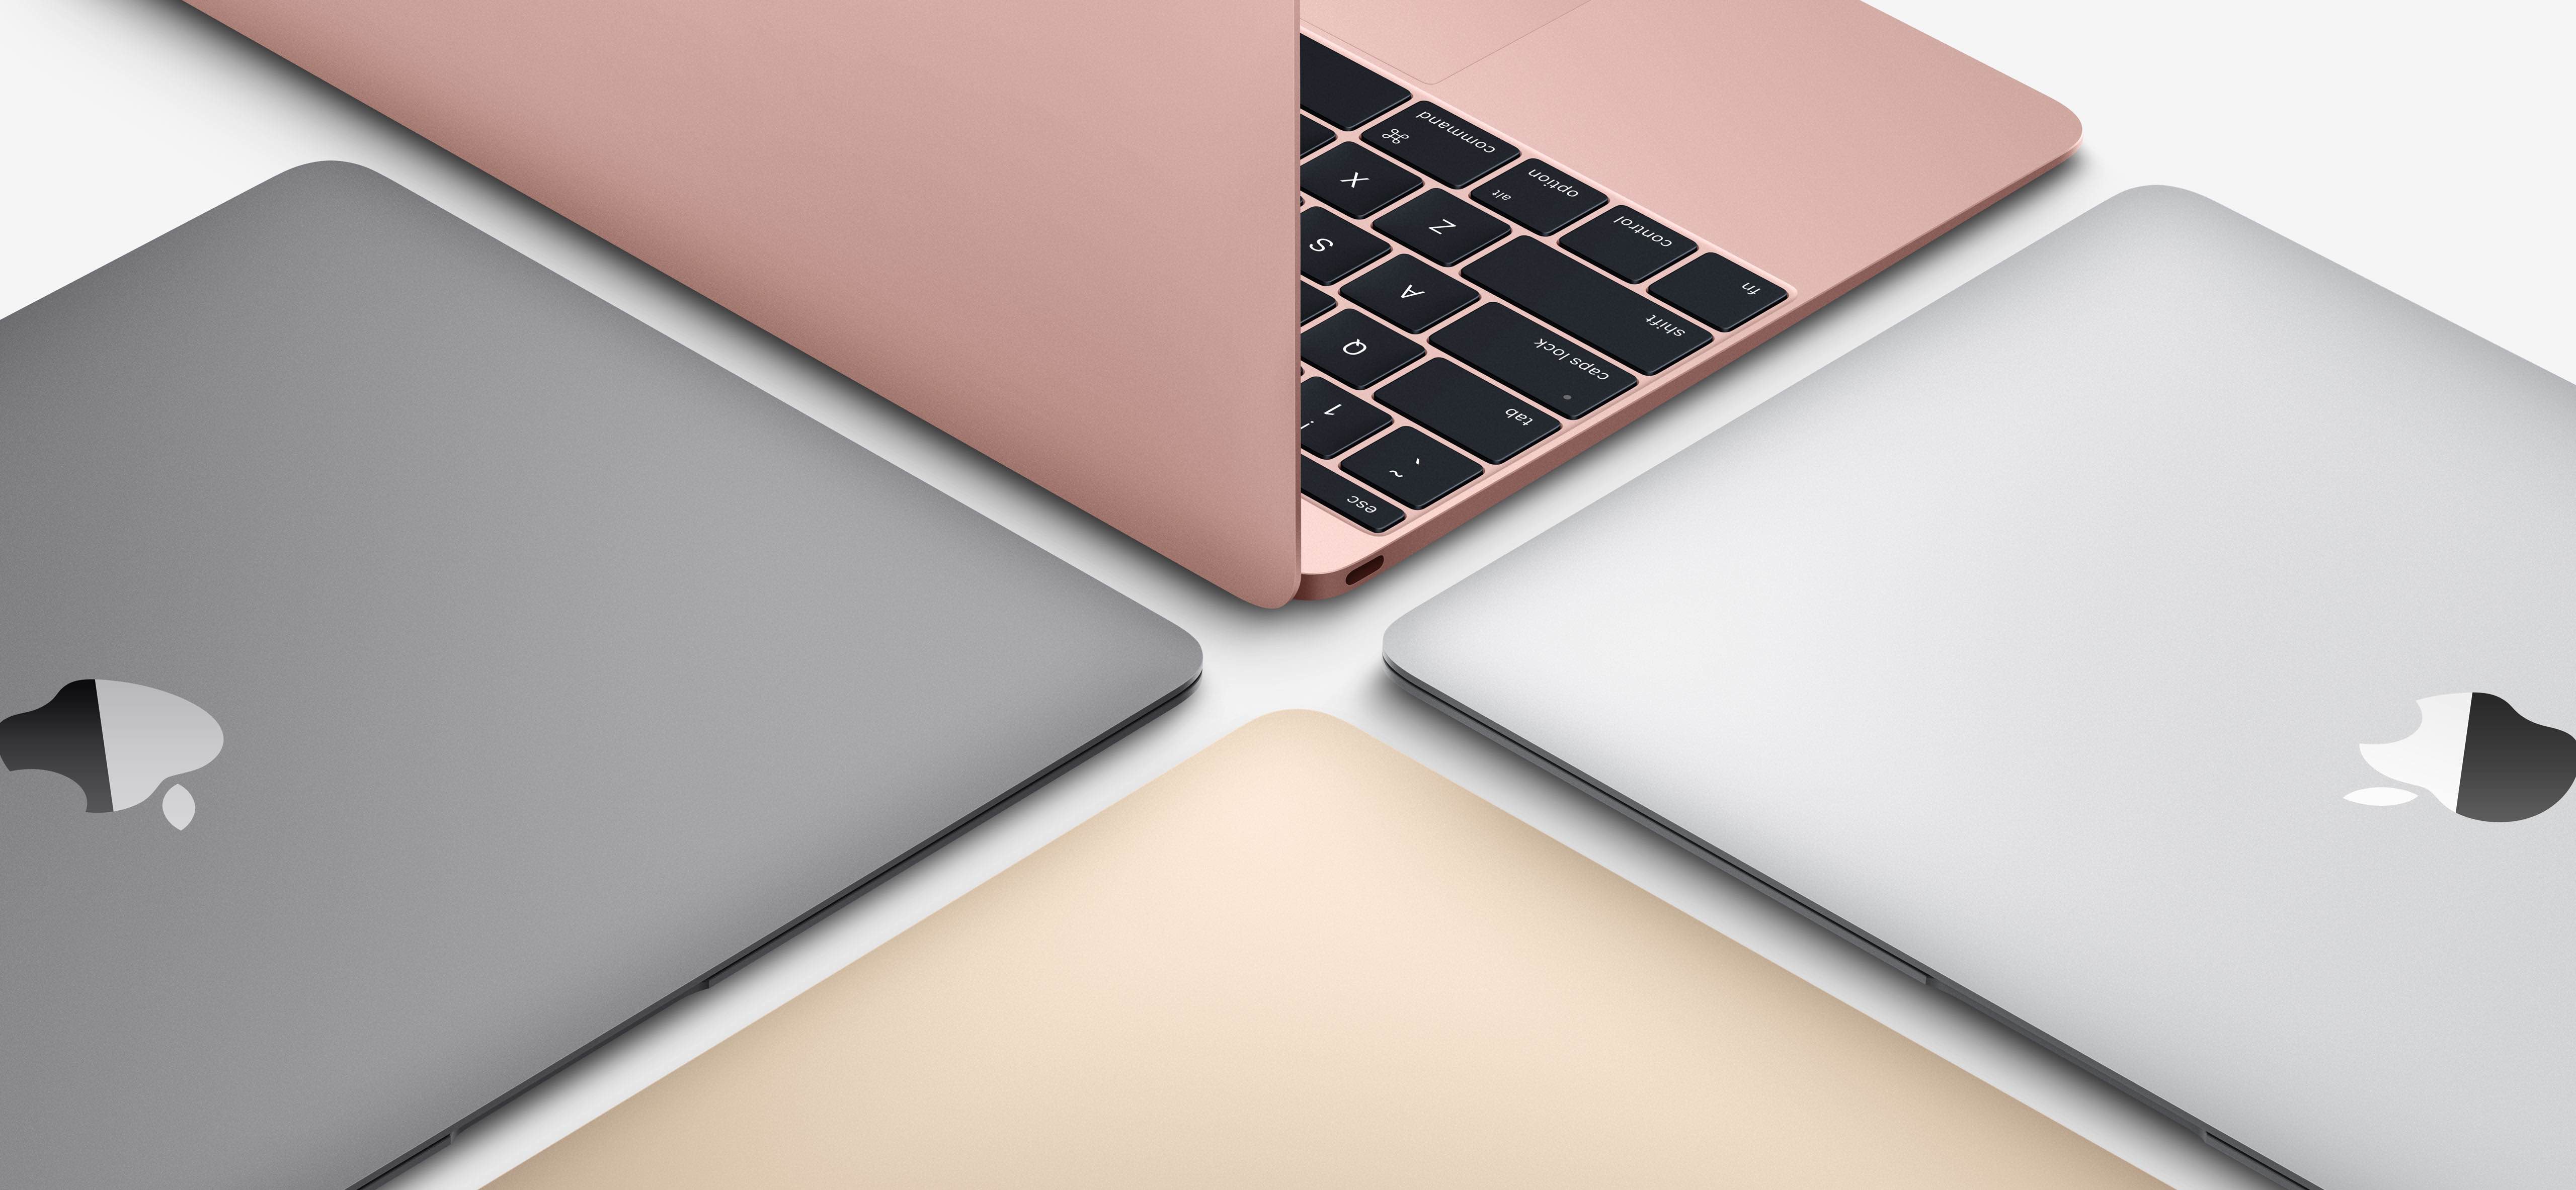 Twelve inch MacBook Early-2016 family 001